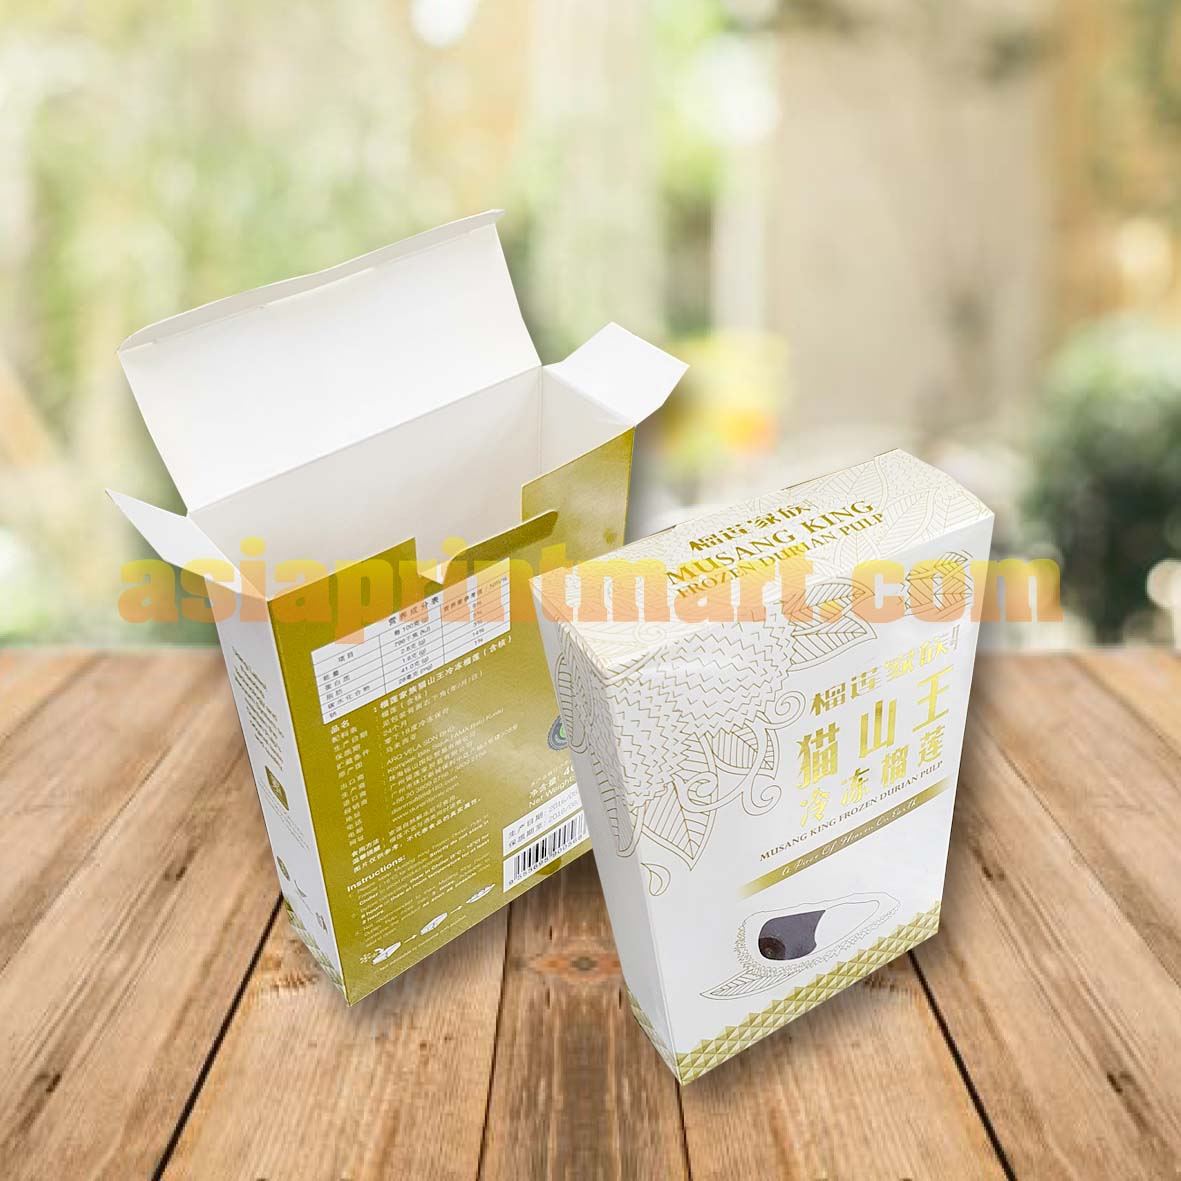 Durian Box Printing Manufacturers | Malaysia Durian Supplier | Print Durian Box | design Durian box |专业榴莲产品包装盒印刷工厂 | Print food box | Durian Musang King | Malaysia Durian 